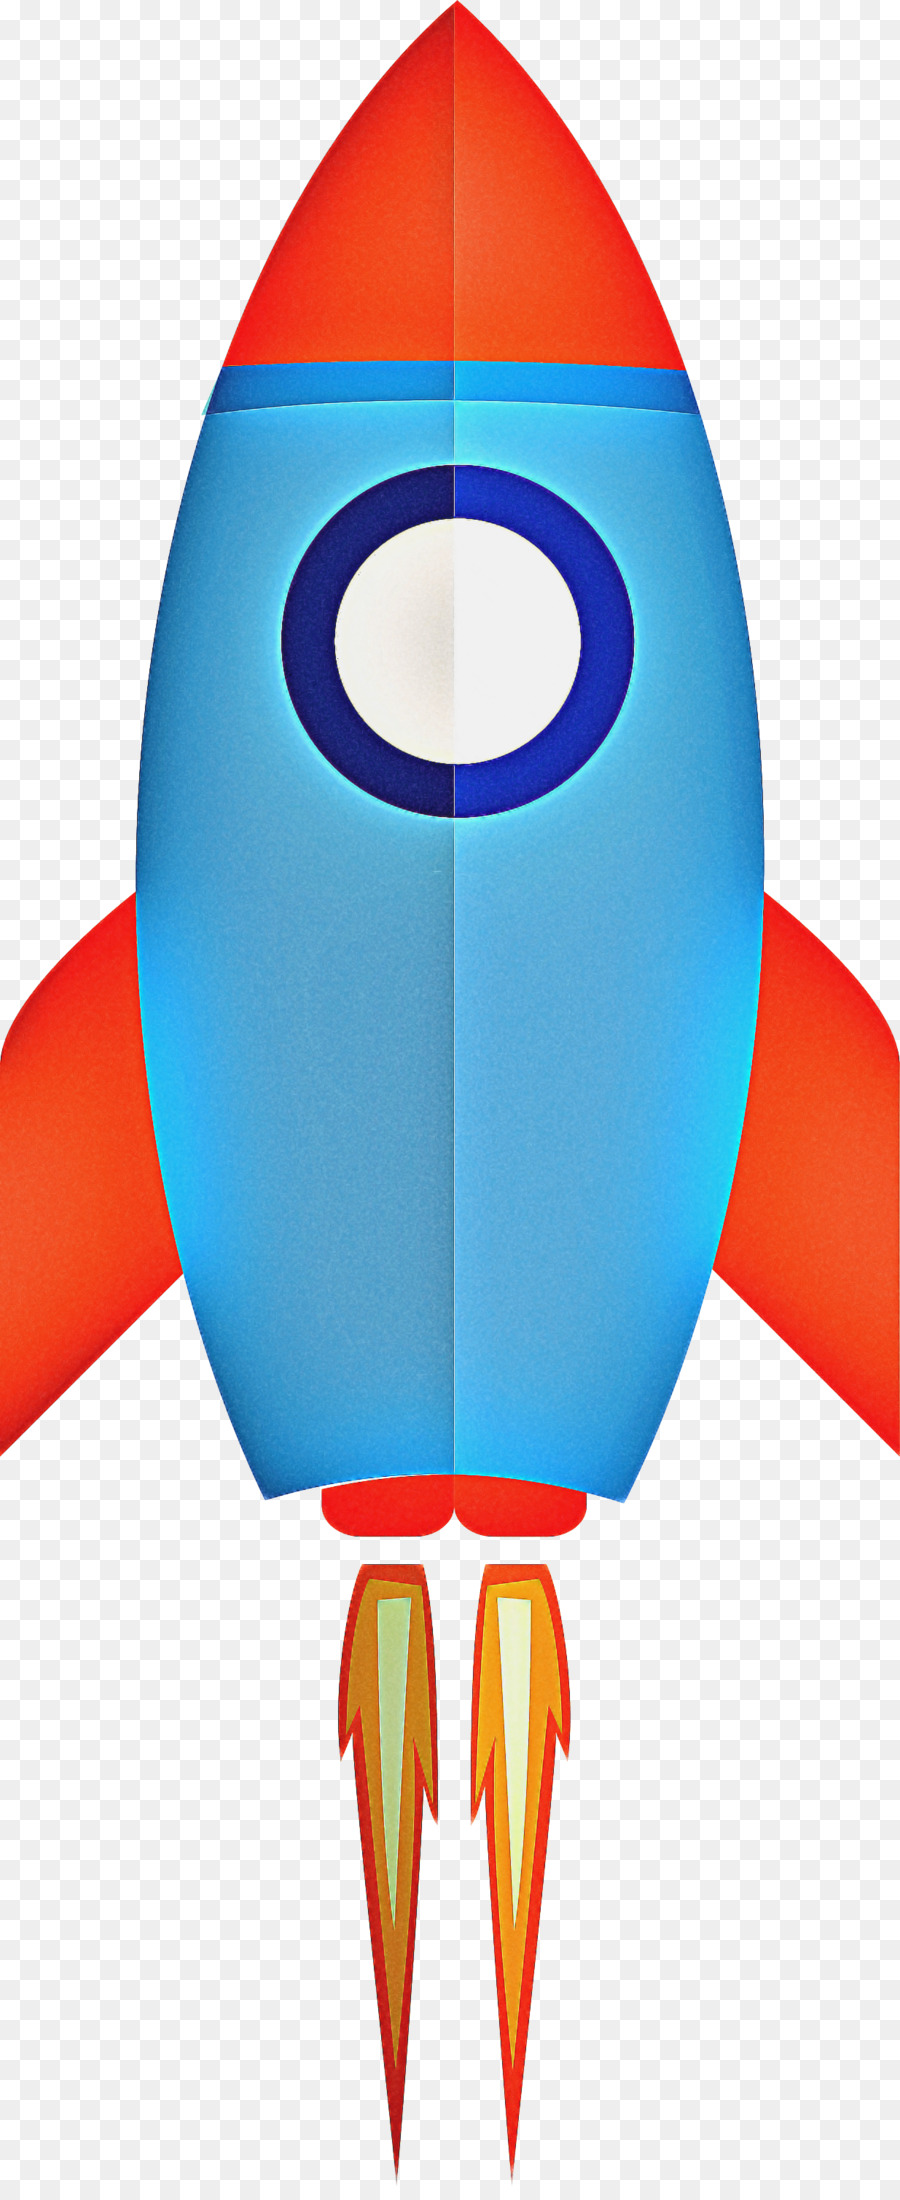 Ubiquiti Rocket M5 ROCKETM5 Clip art Beak Thiết kế sản phẩm - 